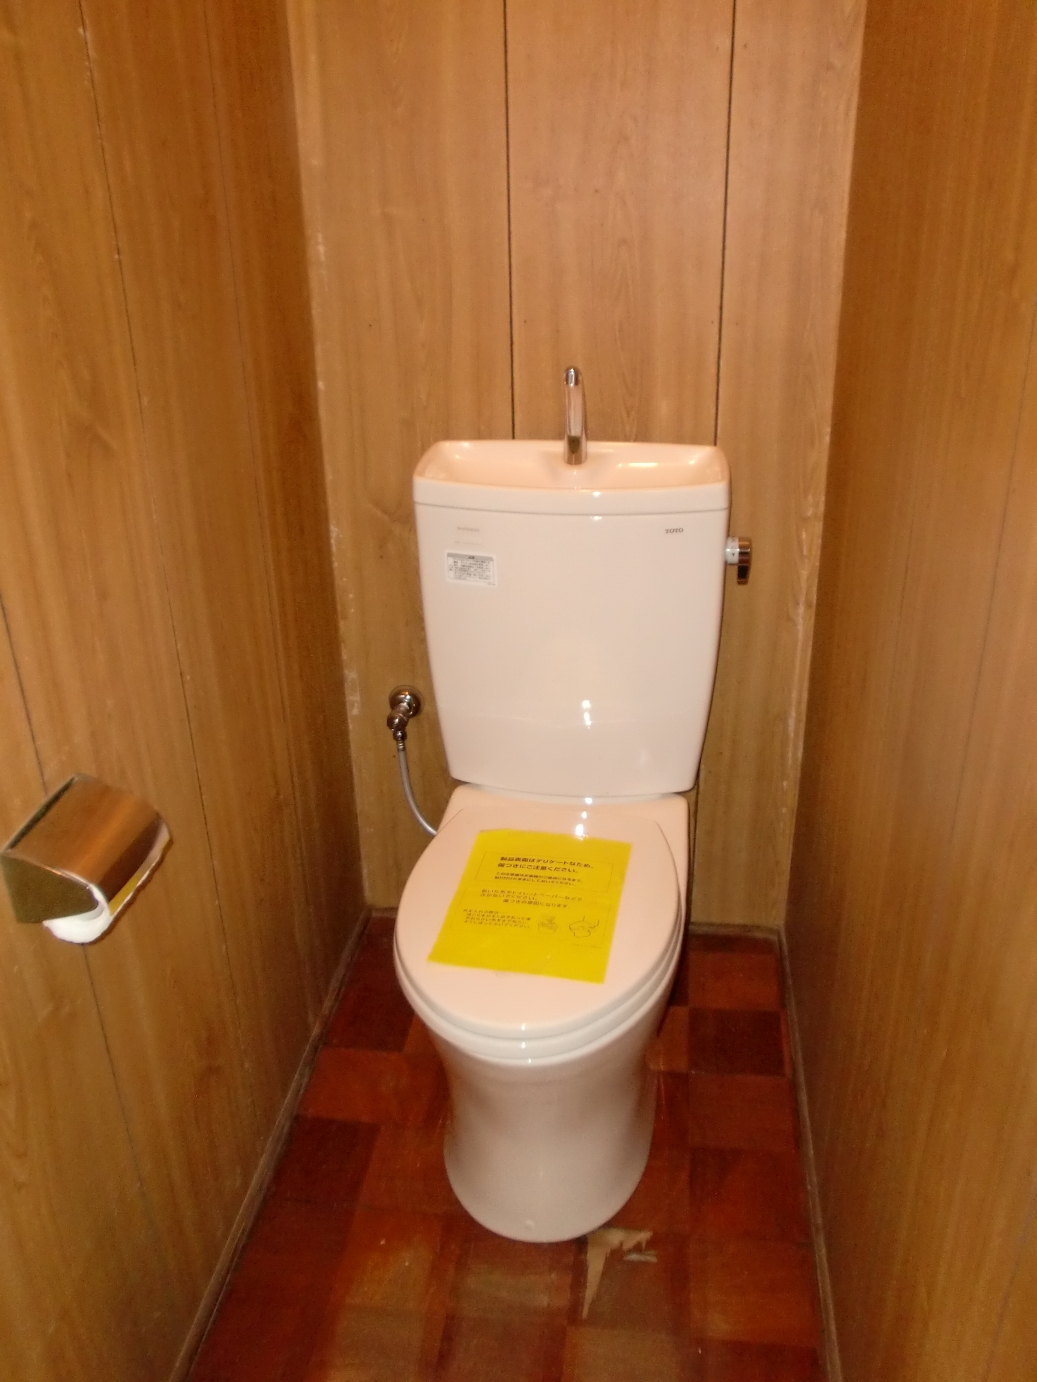 Toilet. Western type